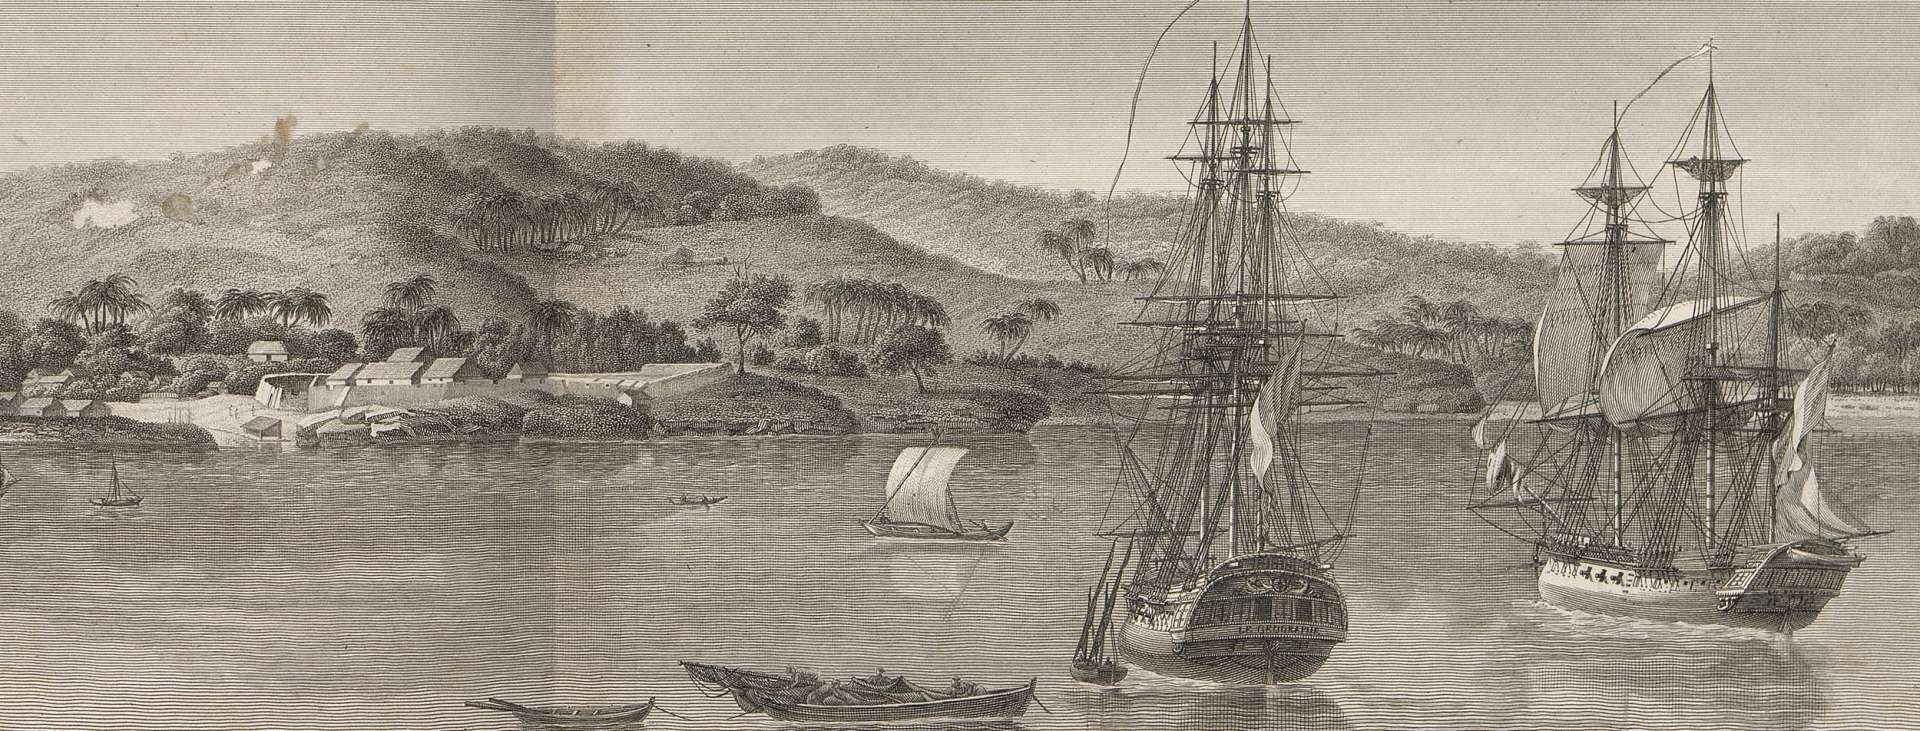 Illustration relation voyage terres australes (BMH R 29)